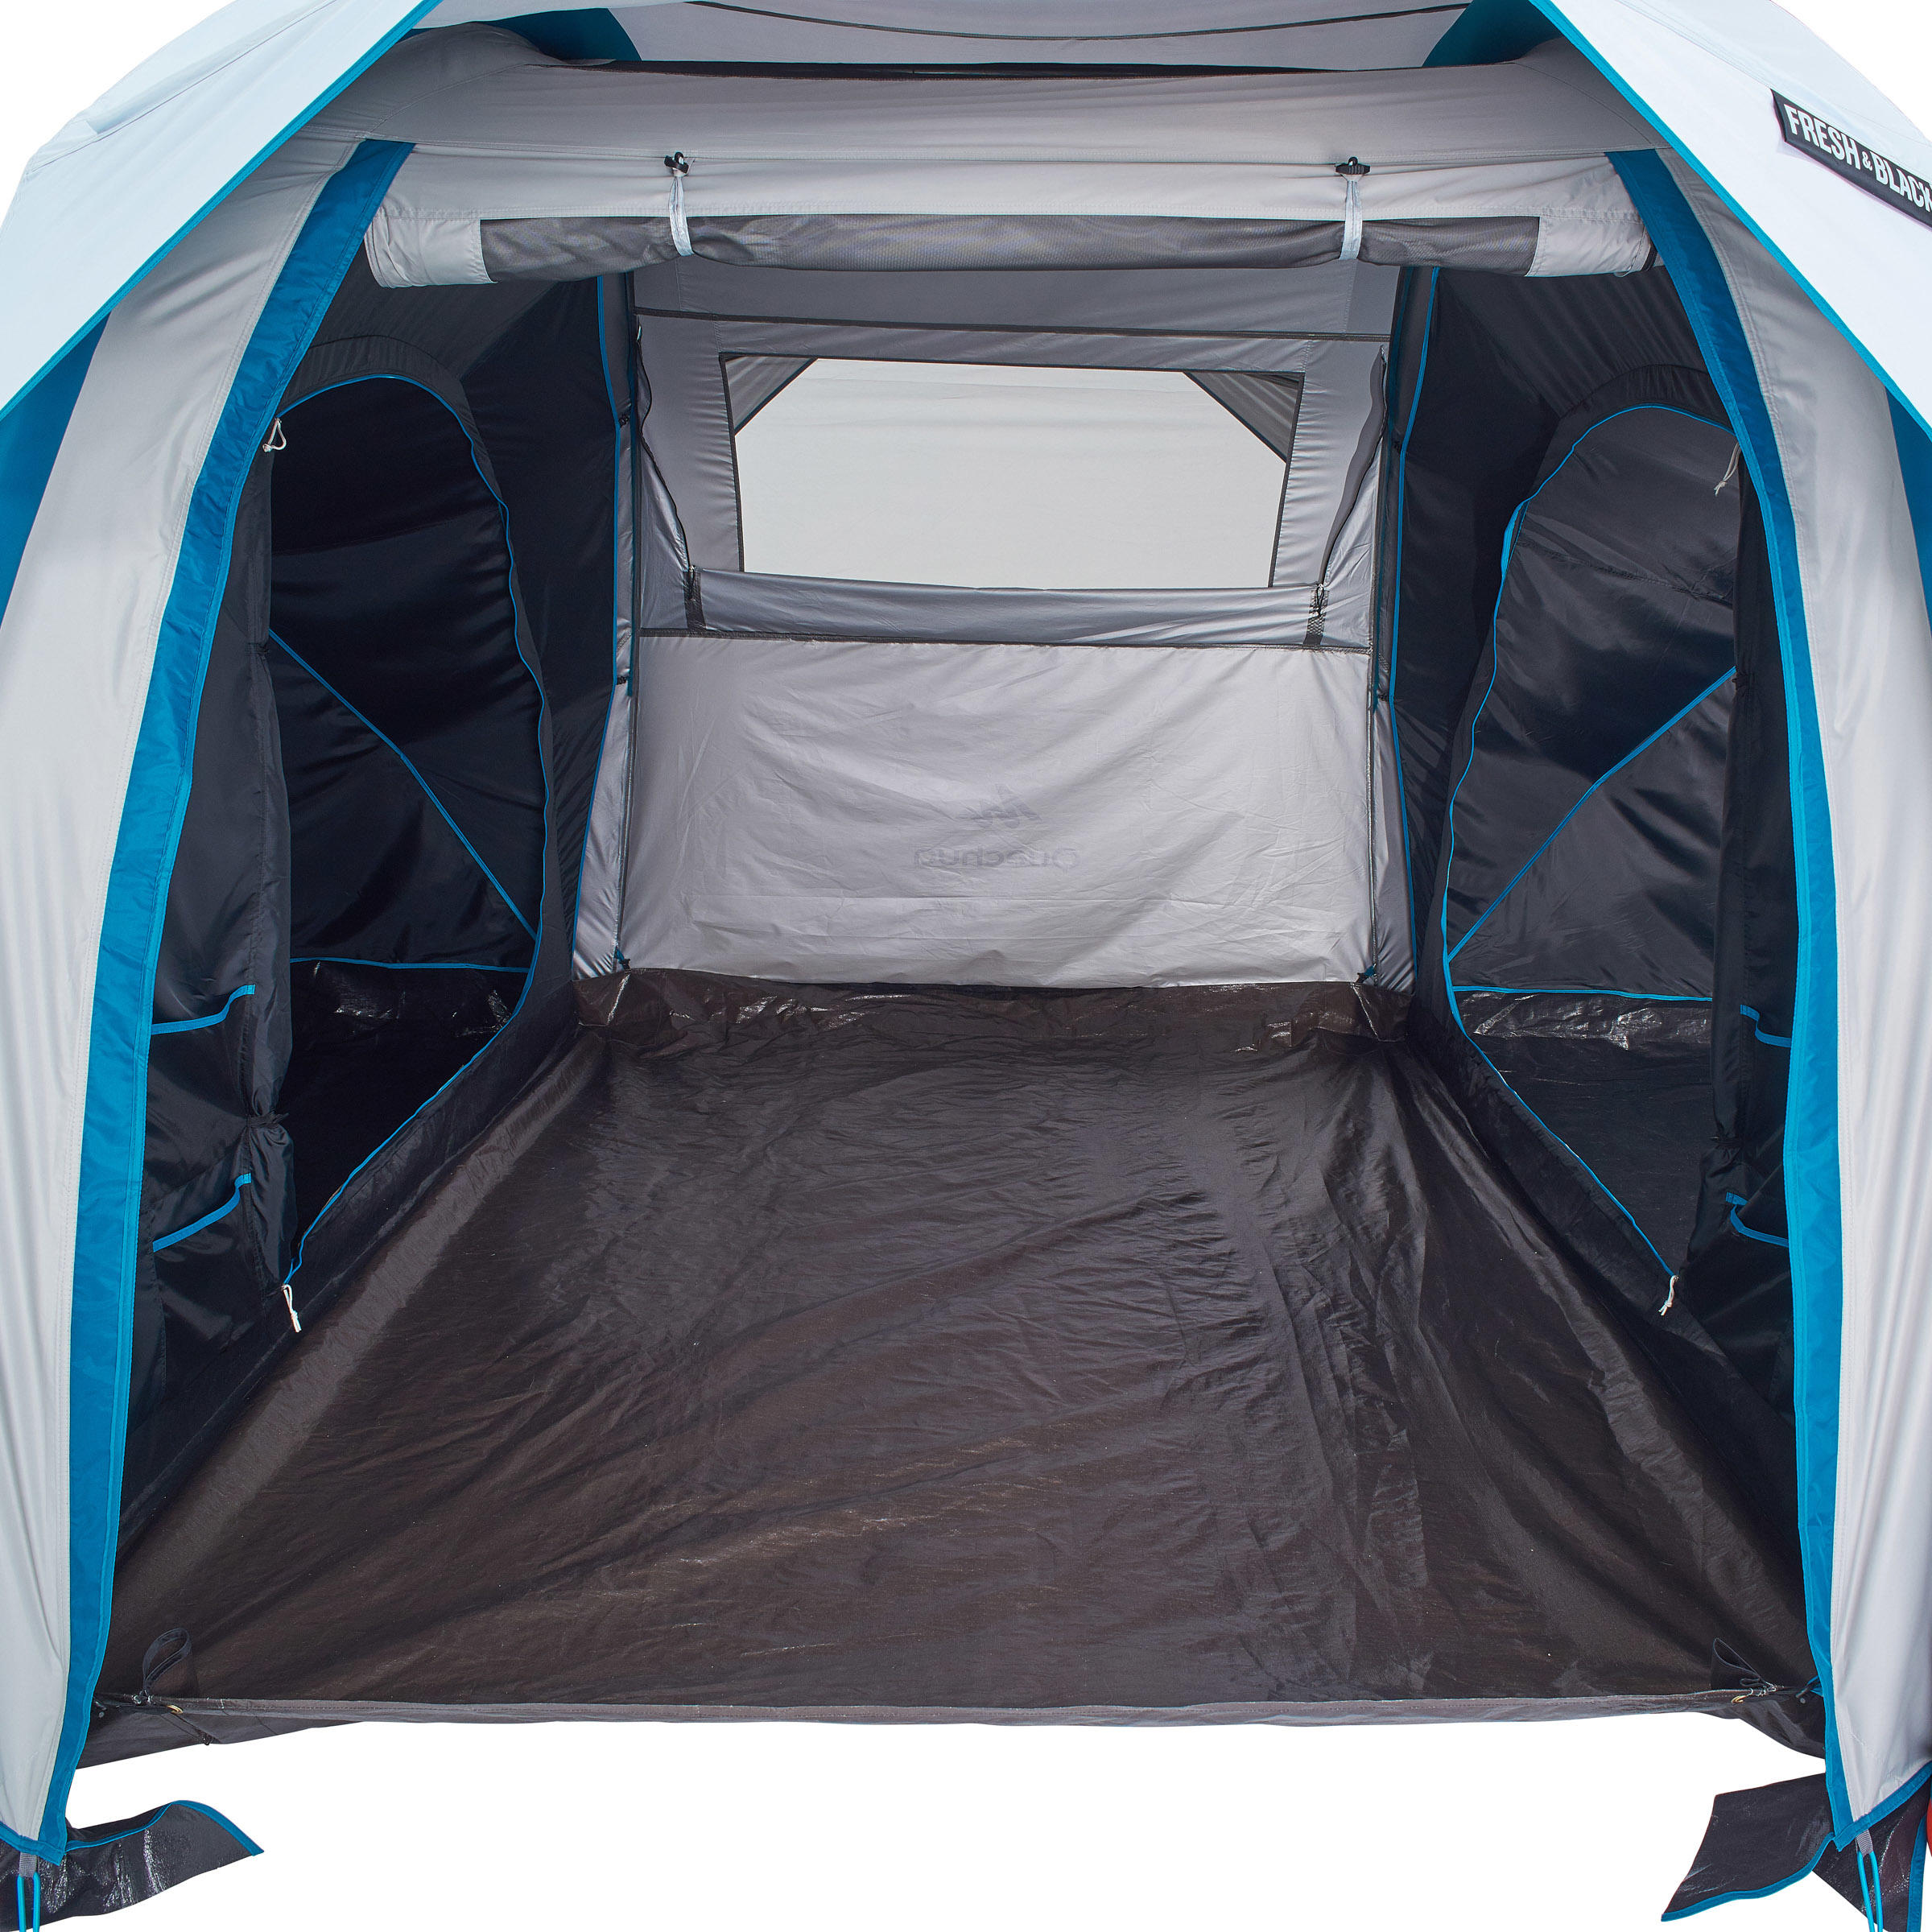 Tente de camping 4 personnes - Air seconds Fresh & Black gris - QUECHUA